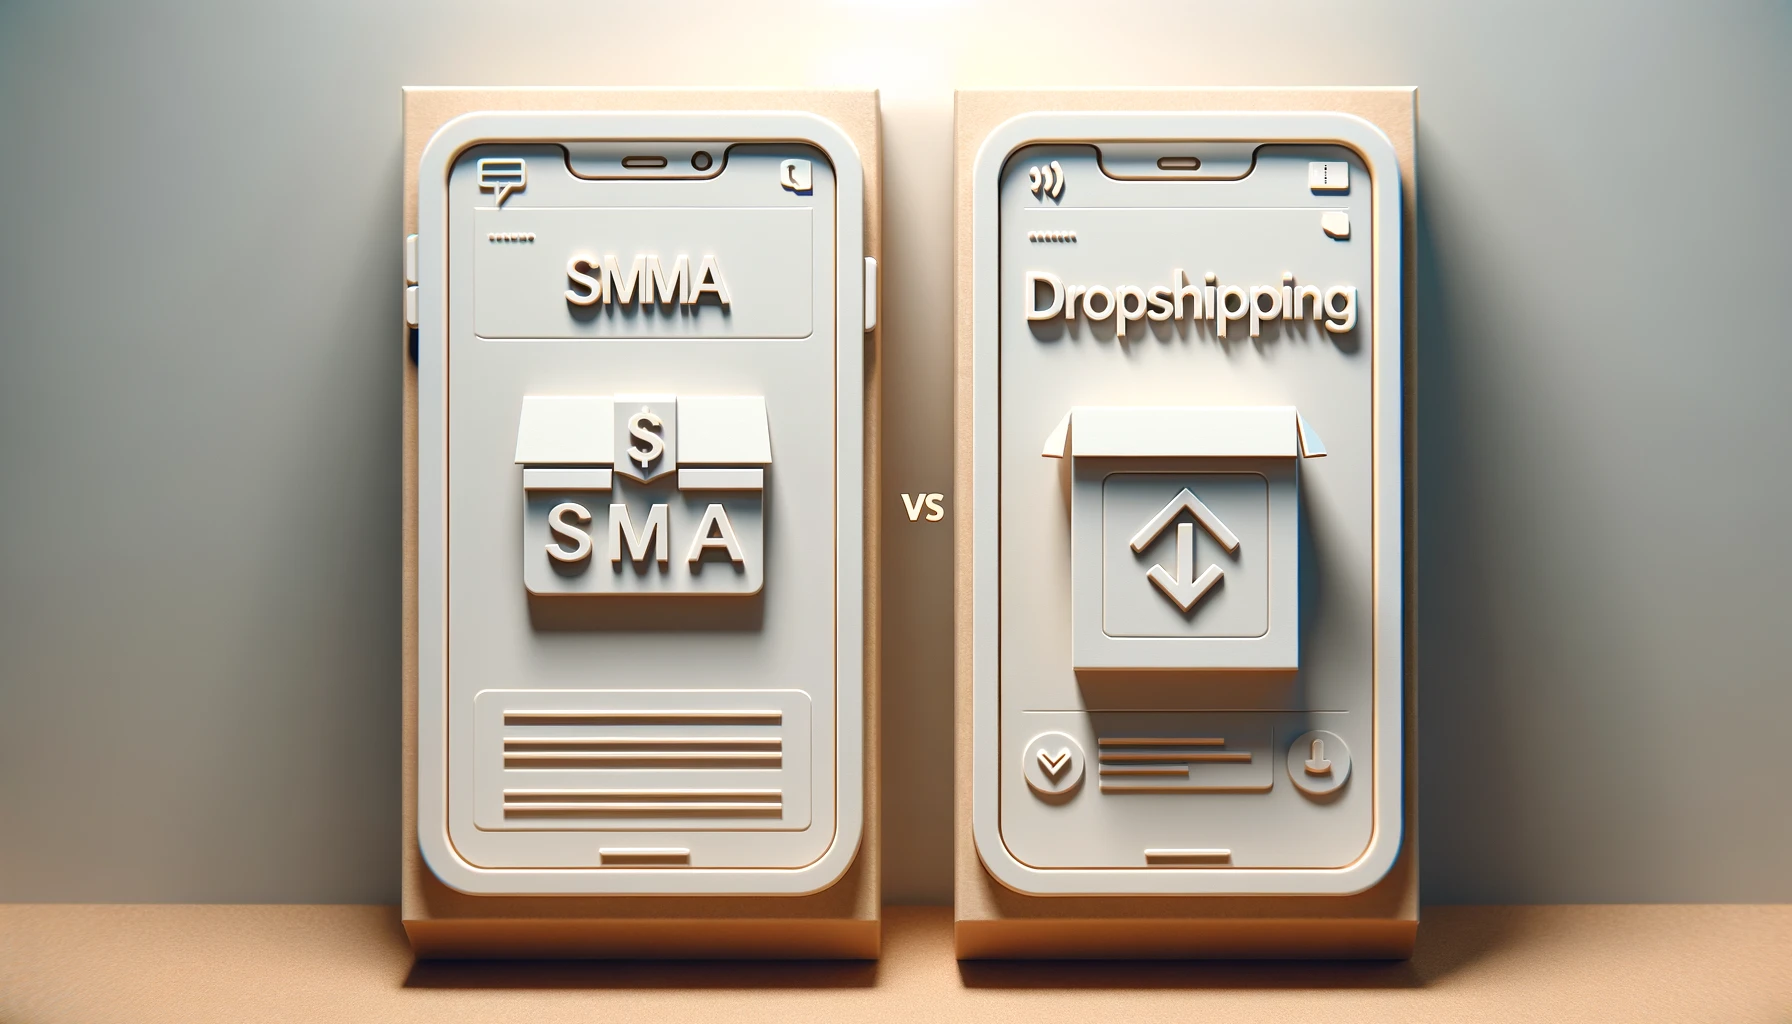 smma vs dropshipping